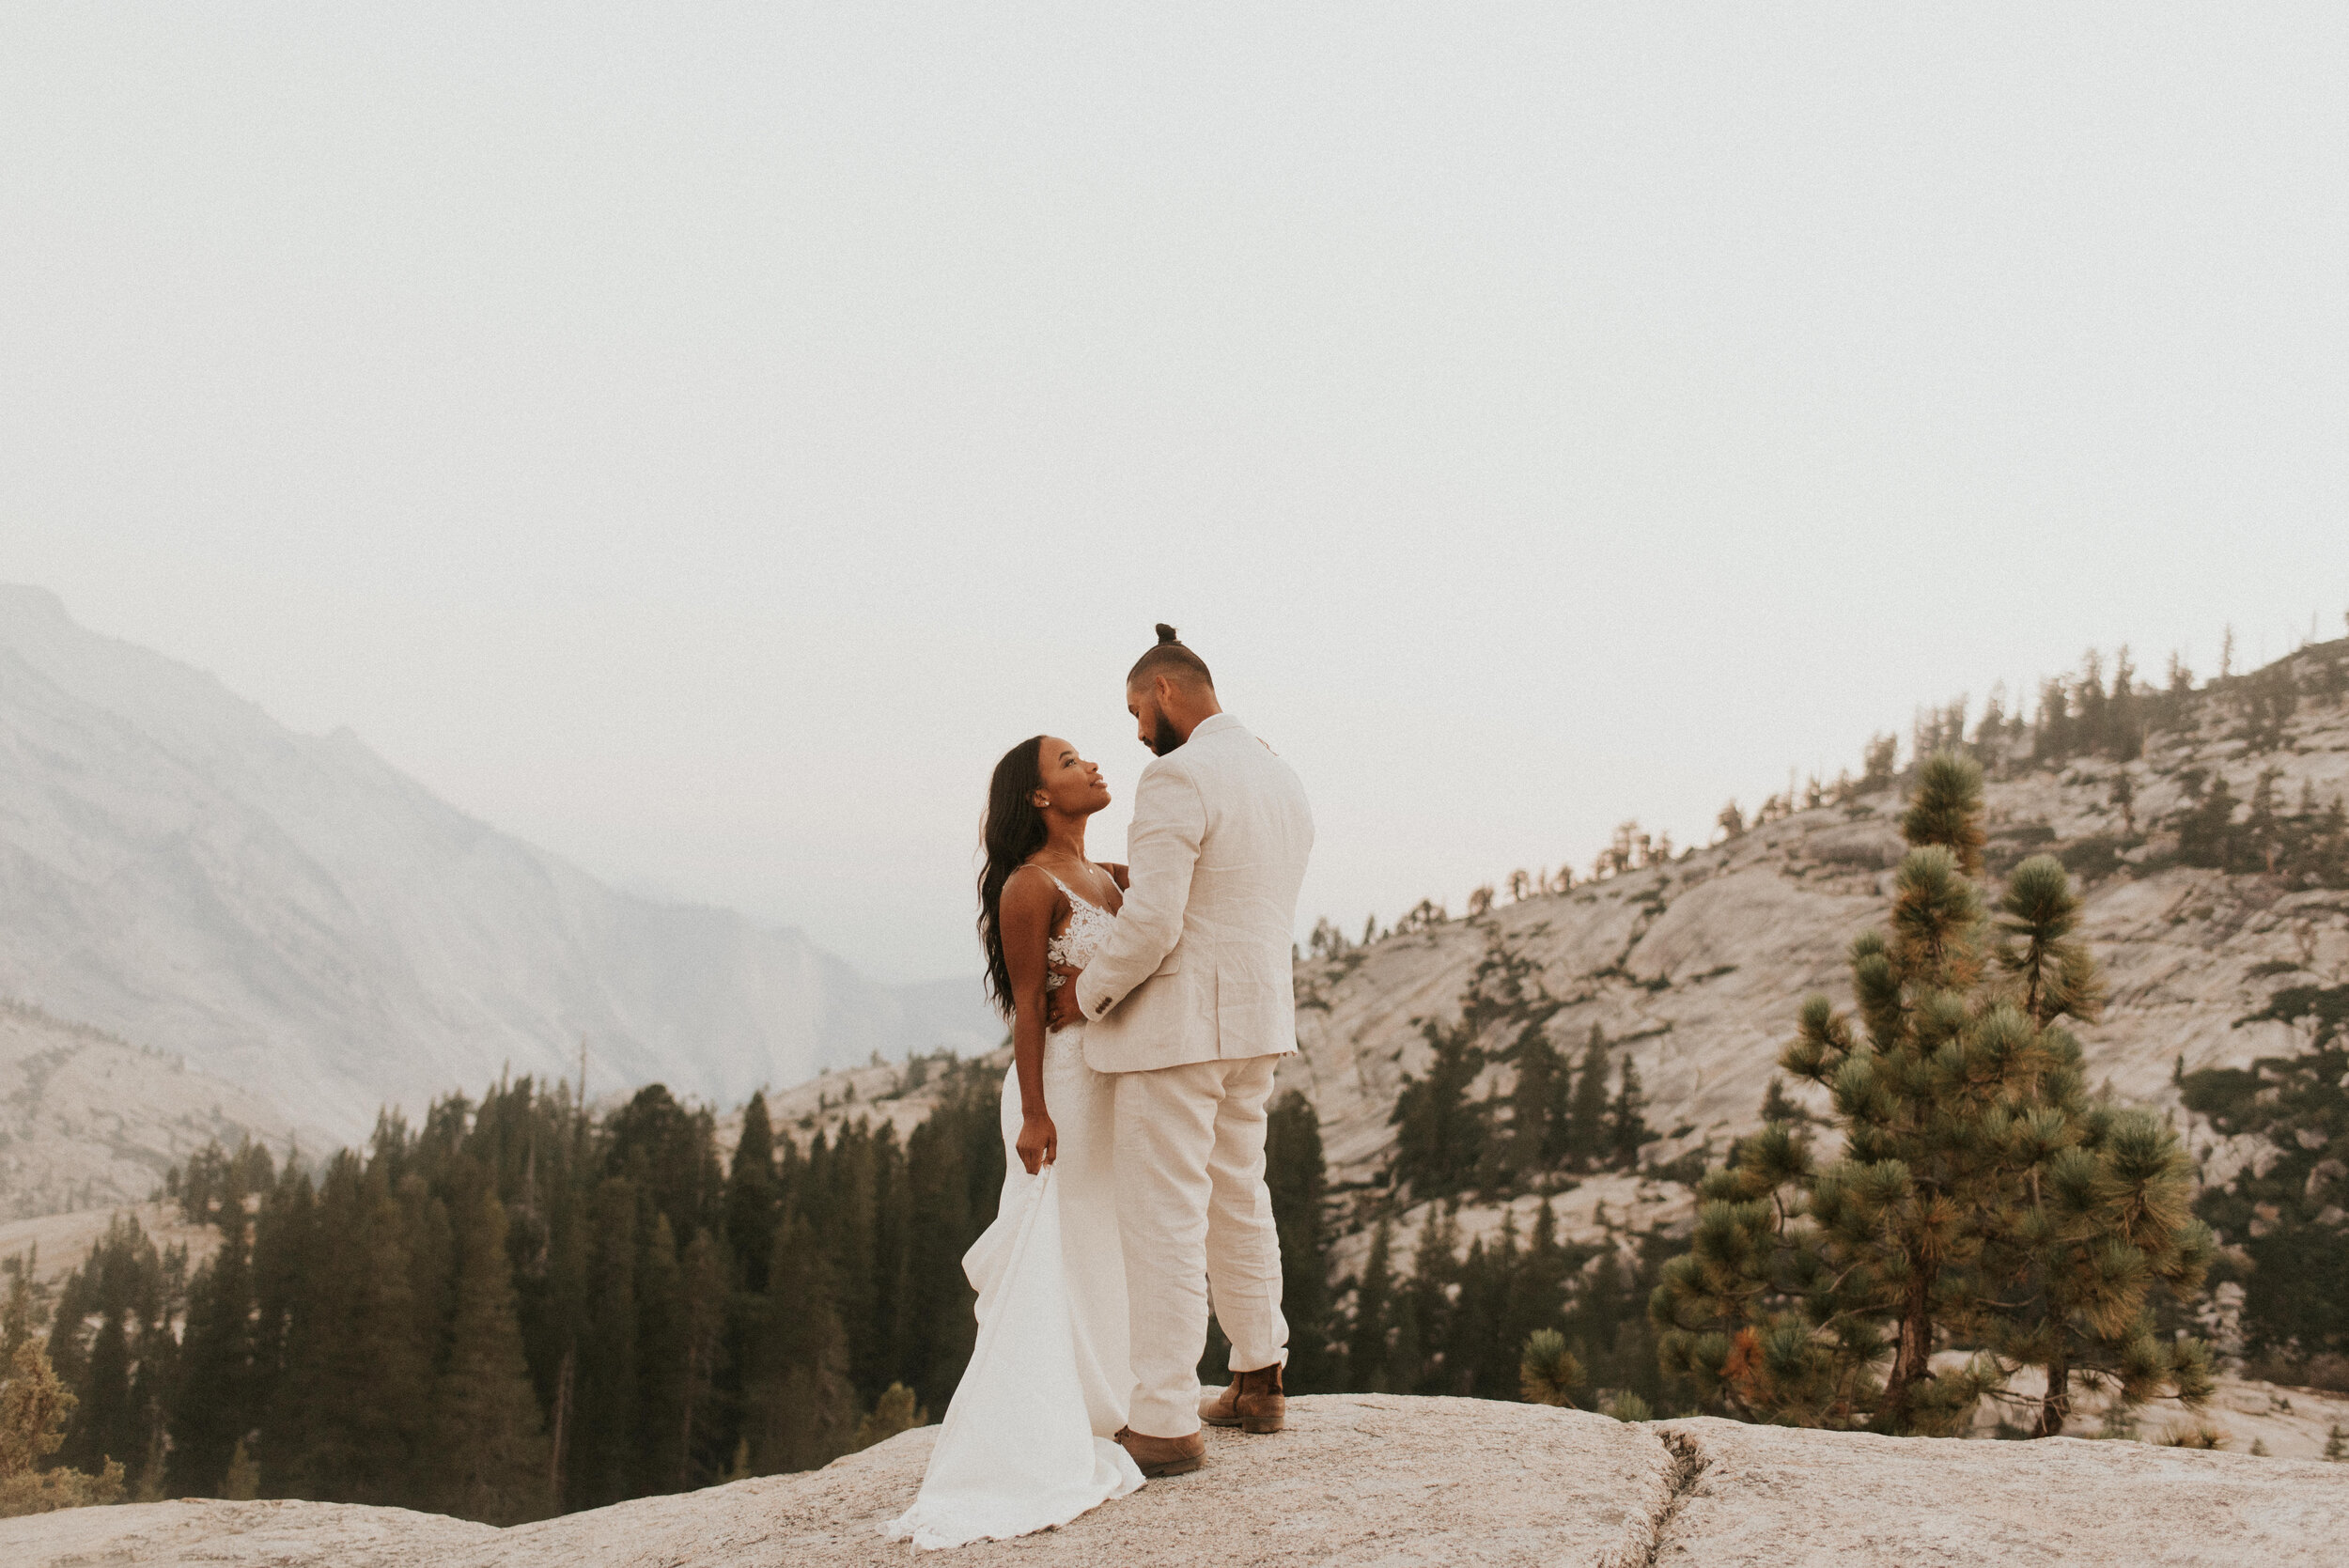 Olmsted Point Elopement | Eloping in Yosemite National Park | Adventure Elopement Wedding | Yosemite Elopement Photographer 